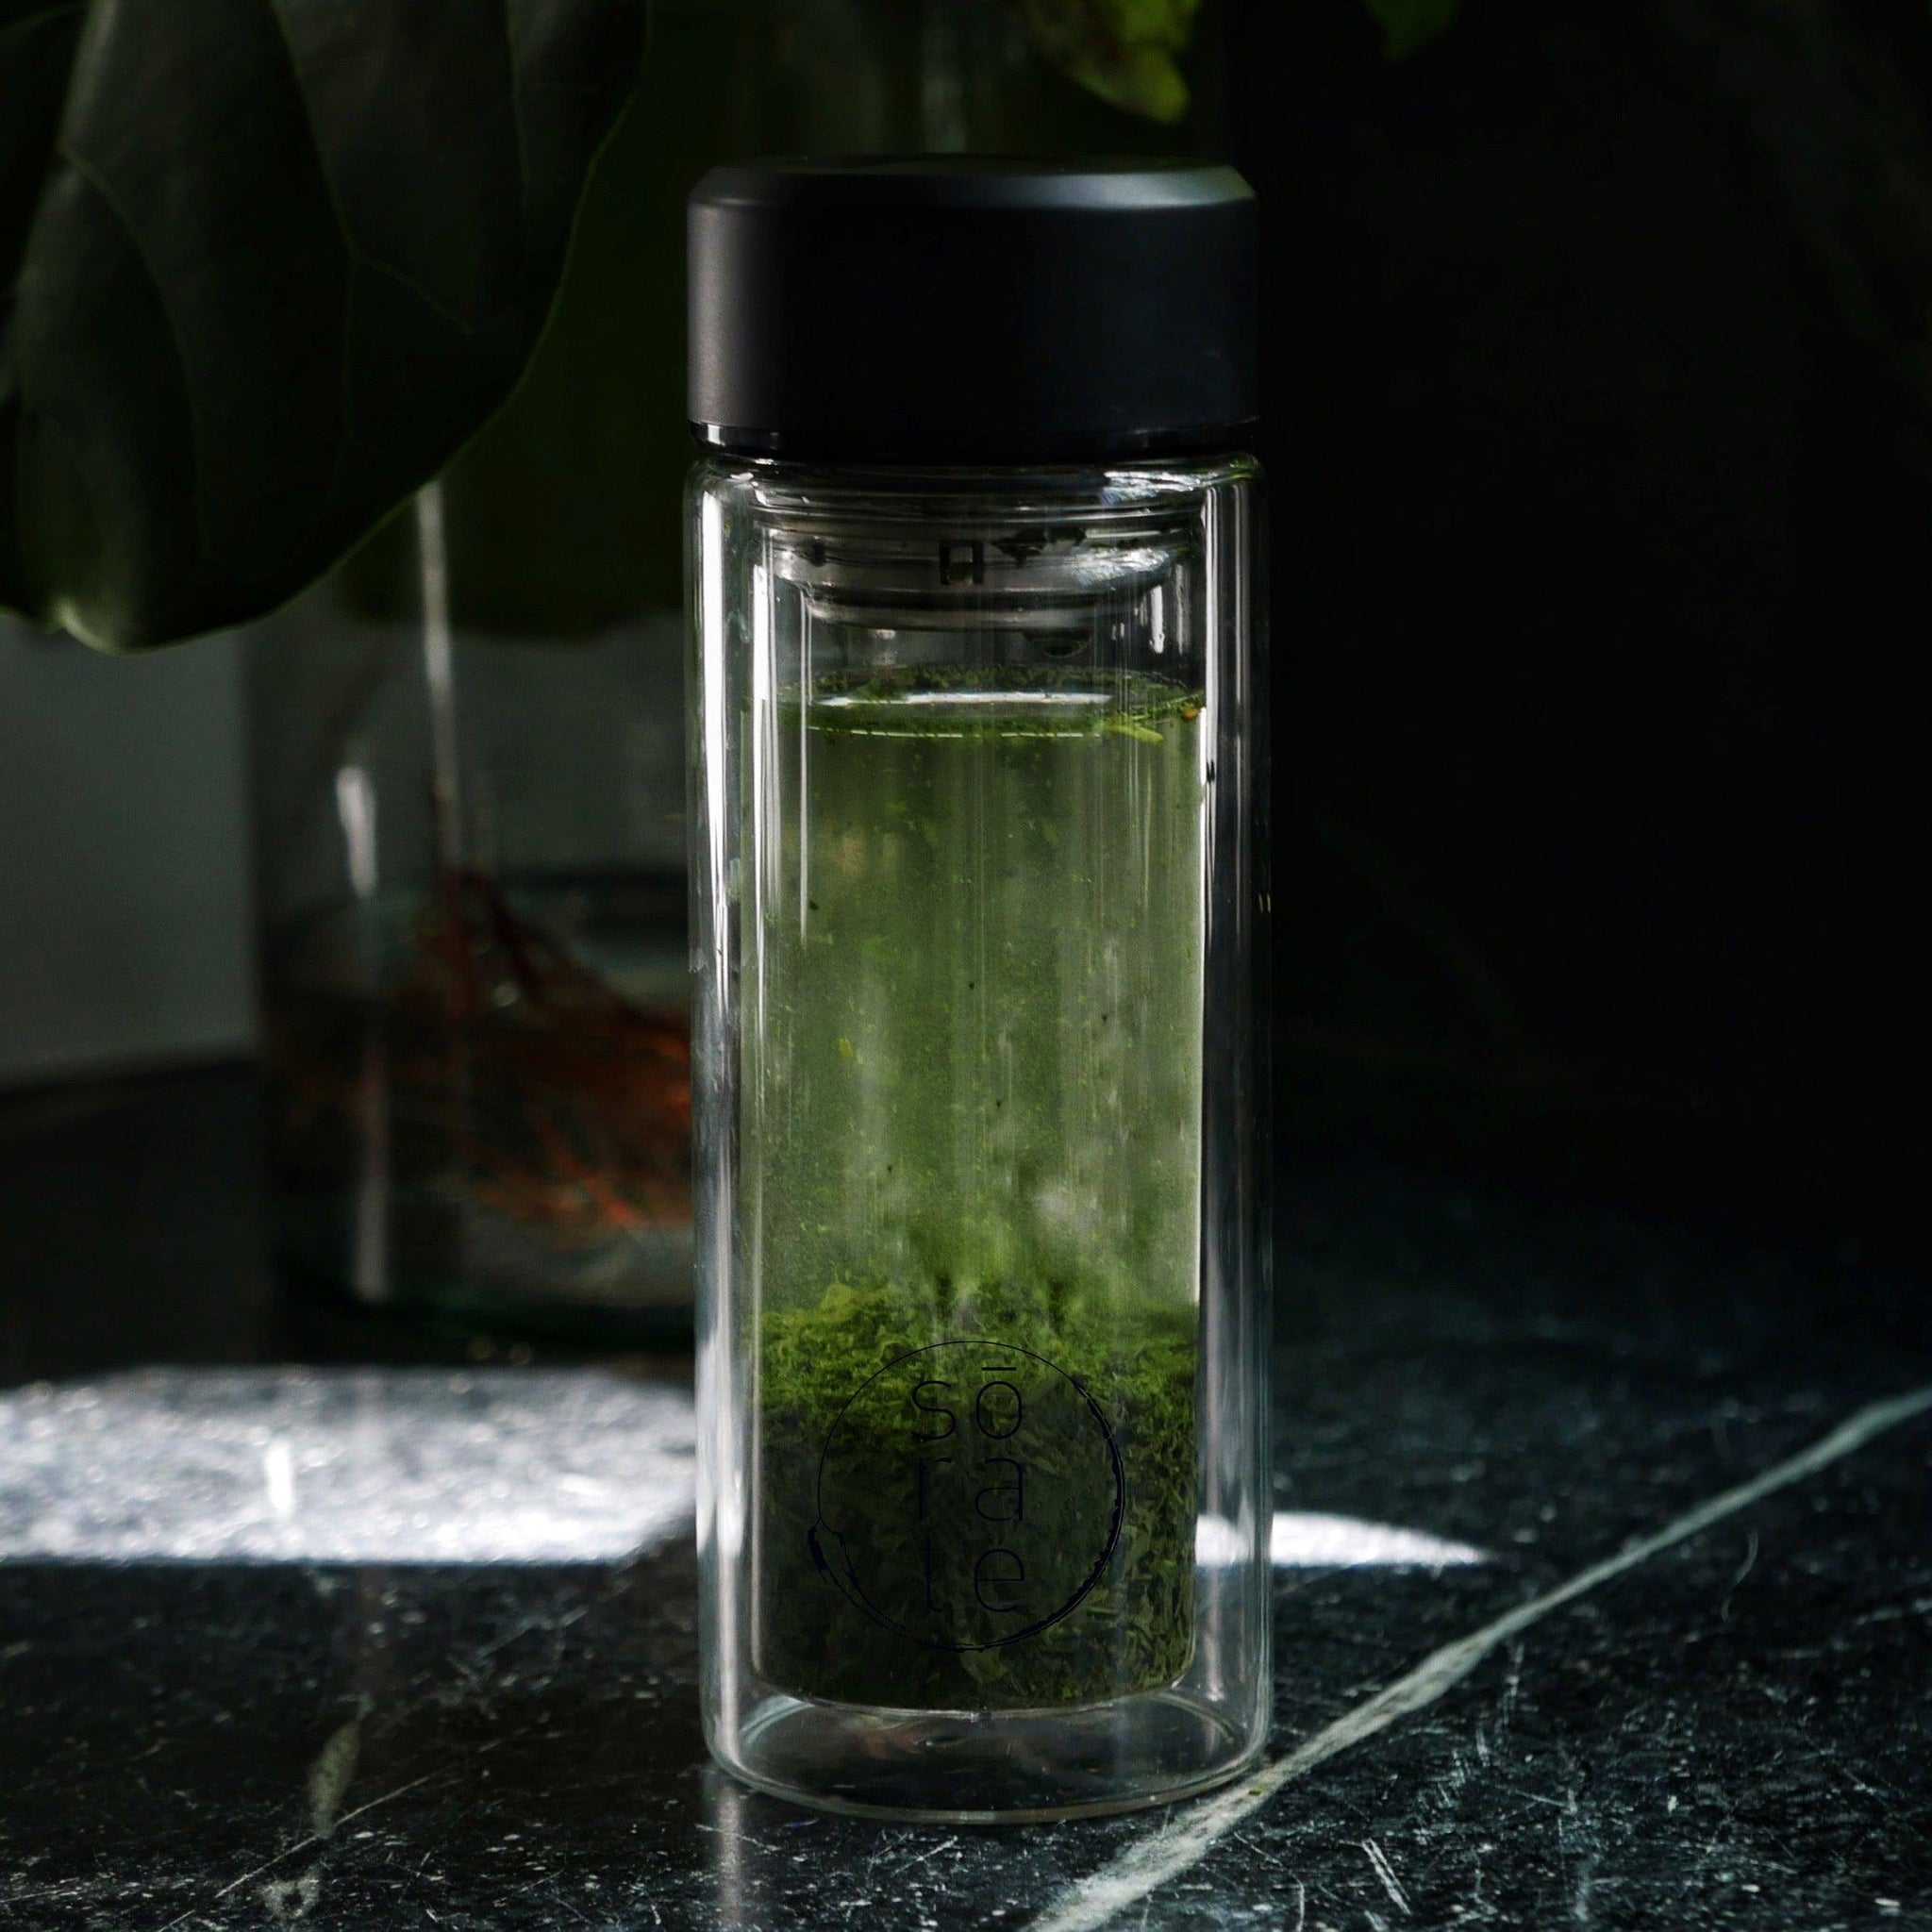 Art of Tea - Glass Matcha Shaker with Infuser